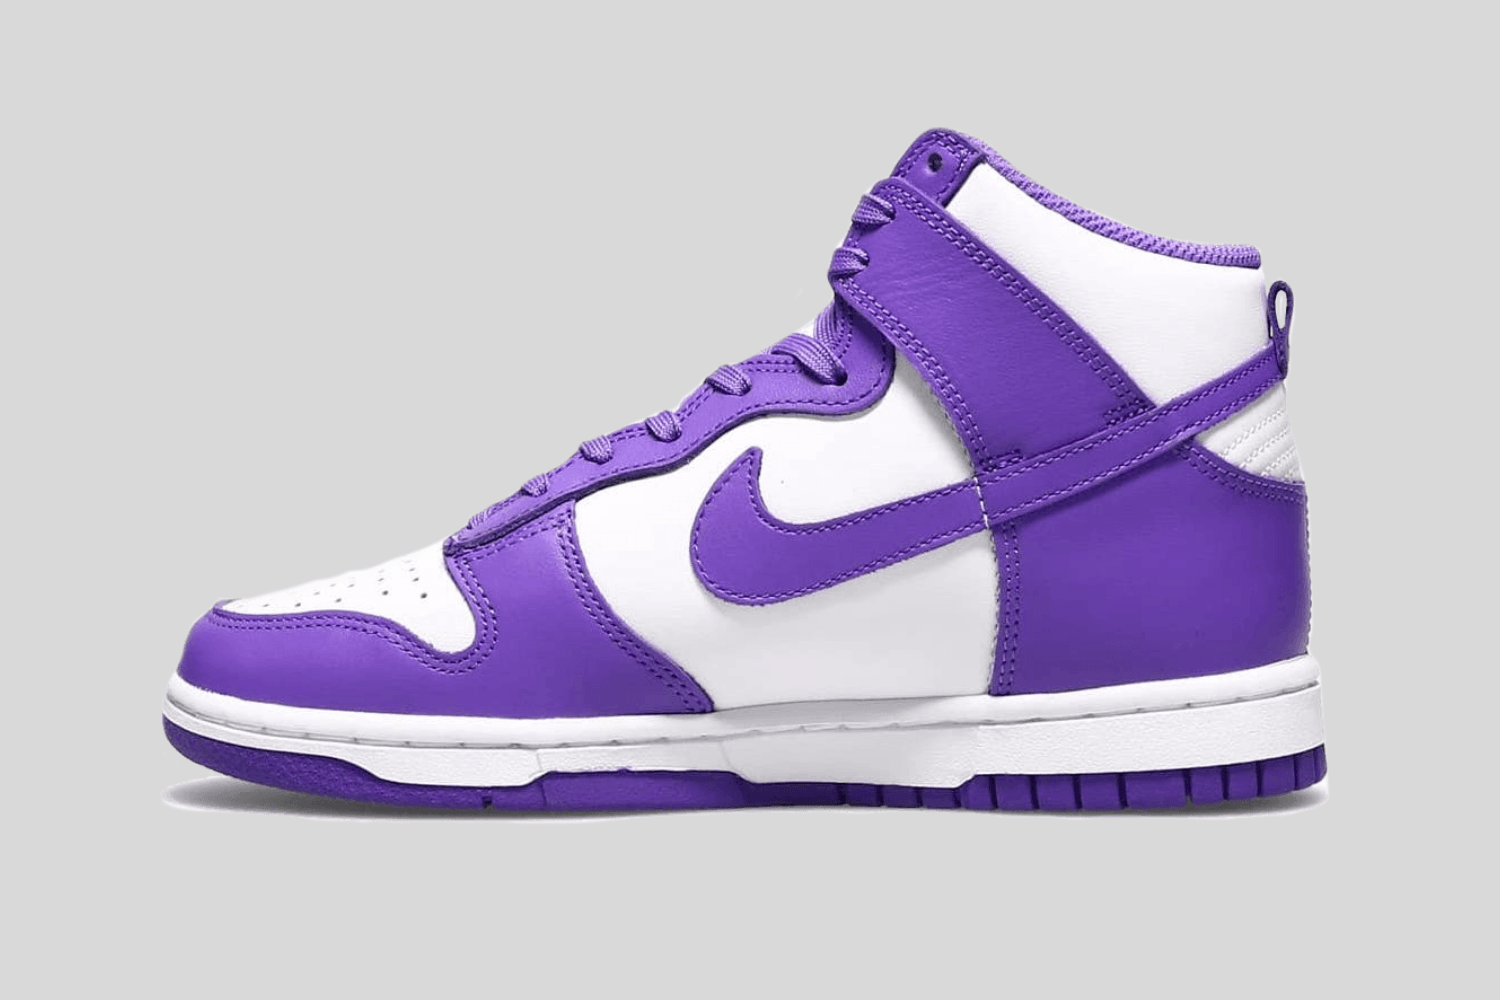 The Nike Dunk High WMNS 'Court Purple' drops soon